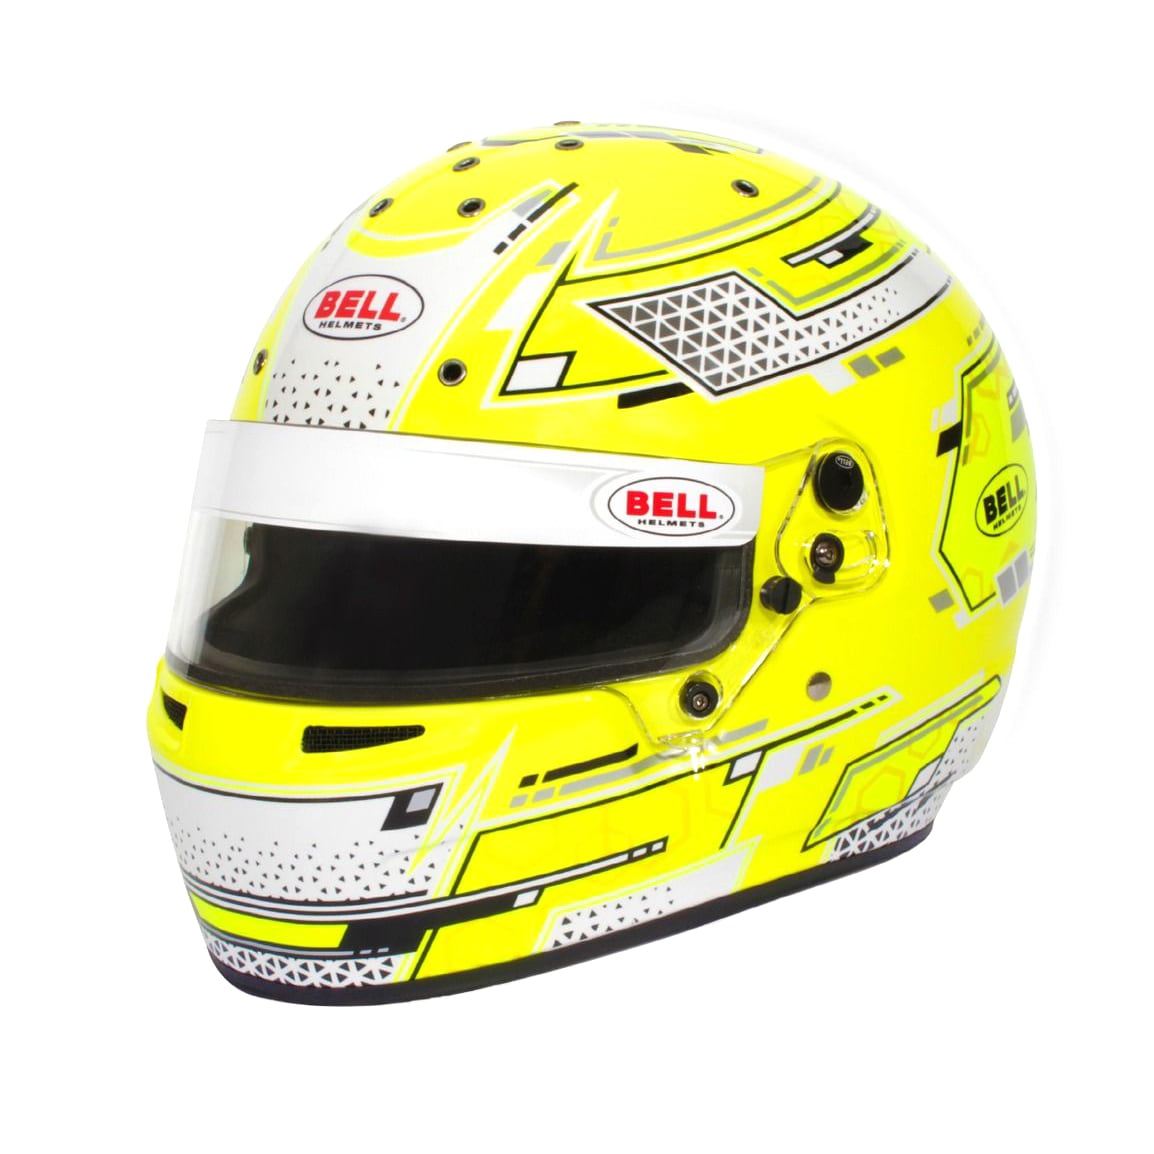 Karting helmet Bell RS7-K Stamina Yellow